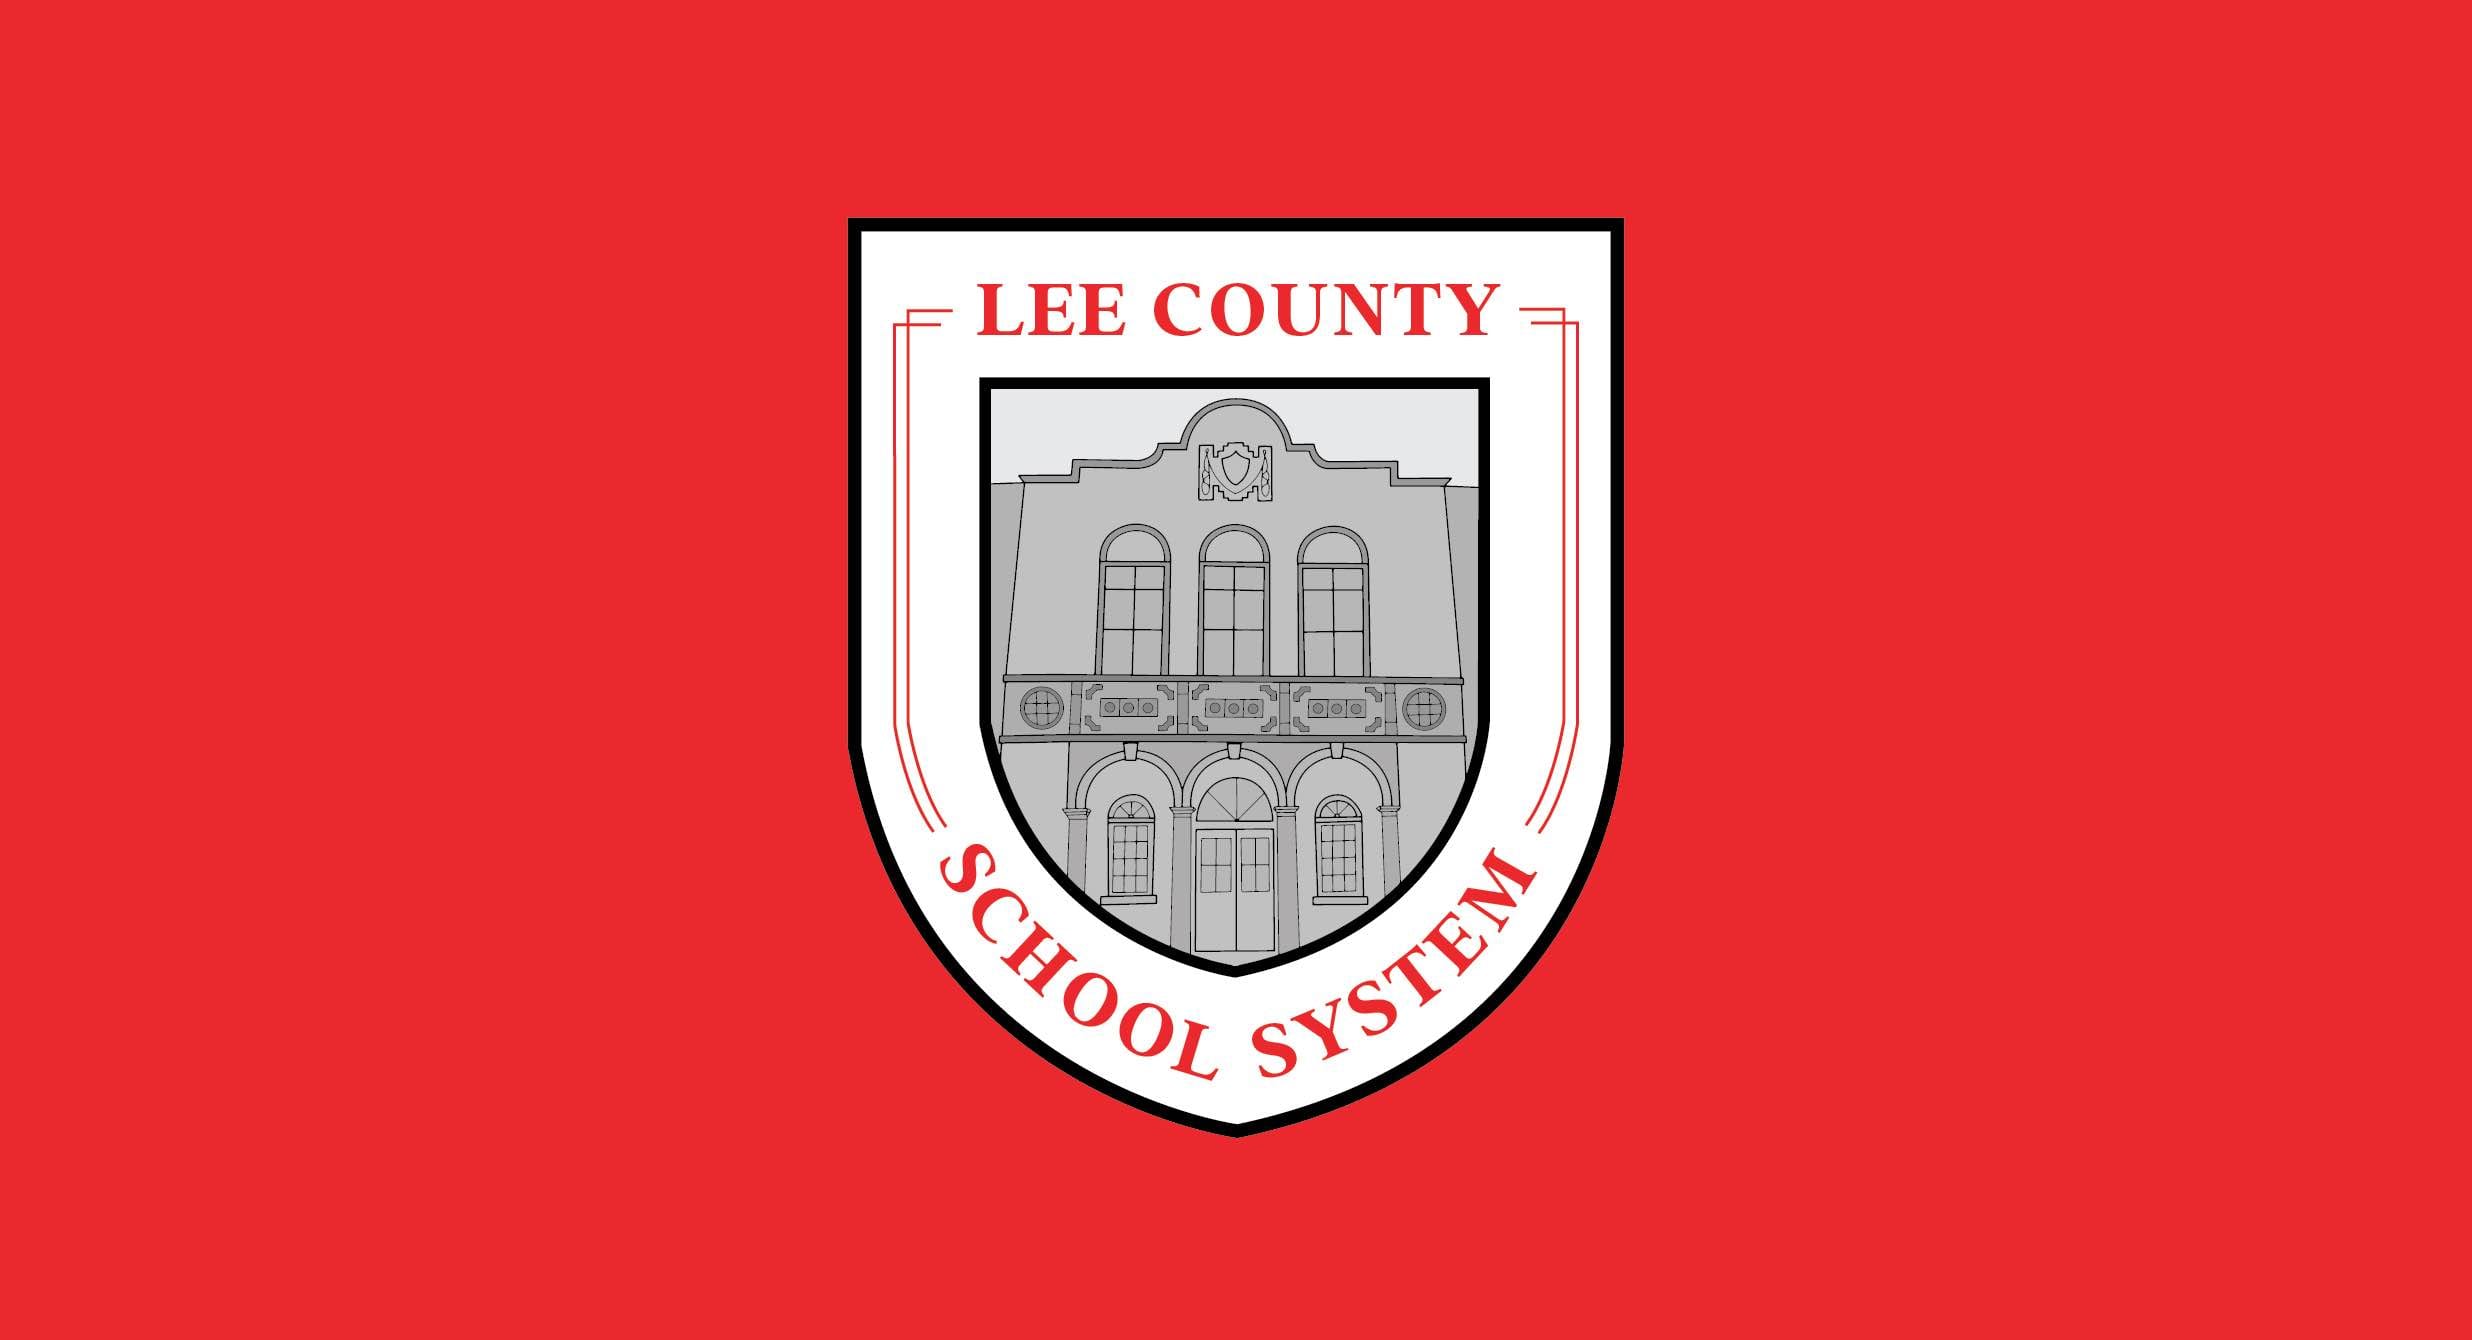 Lee County School System | Brocksfield Design Co.